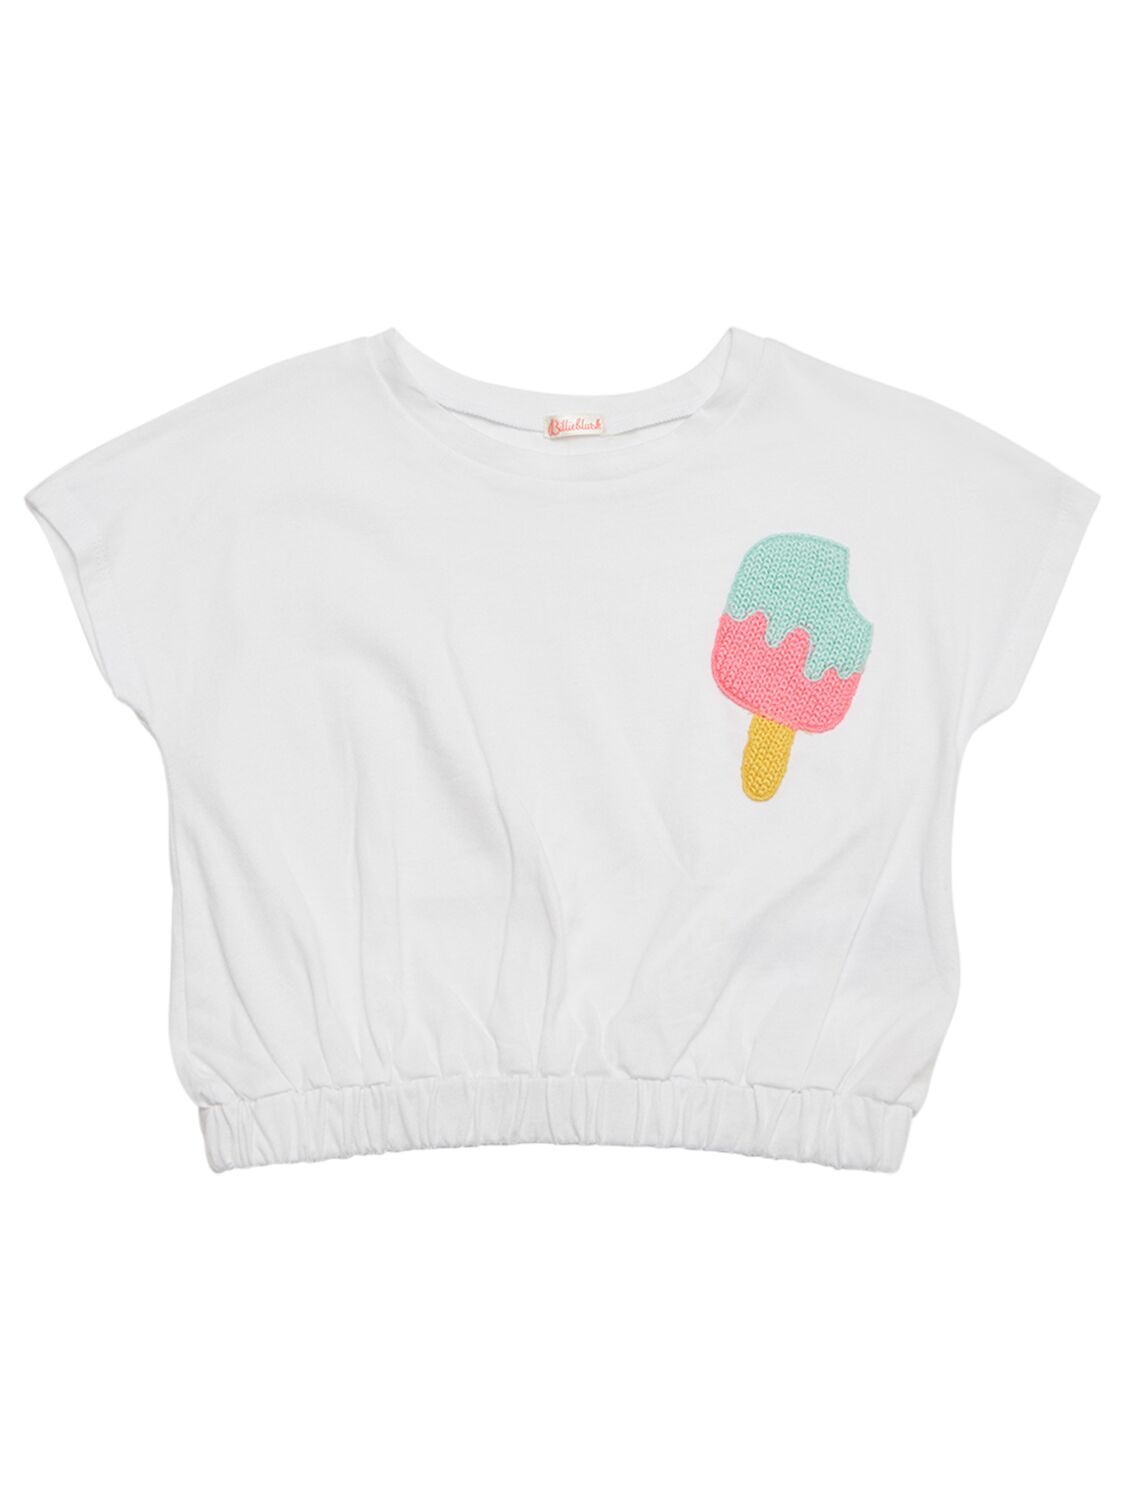 Image of Popsicle Cotton Crop T-shirt